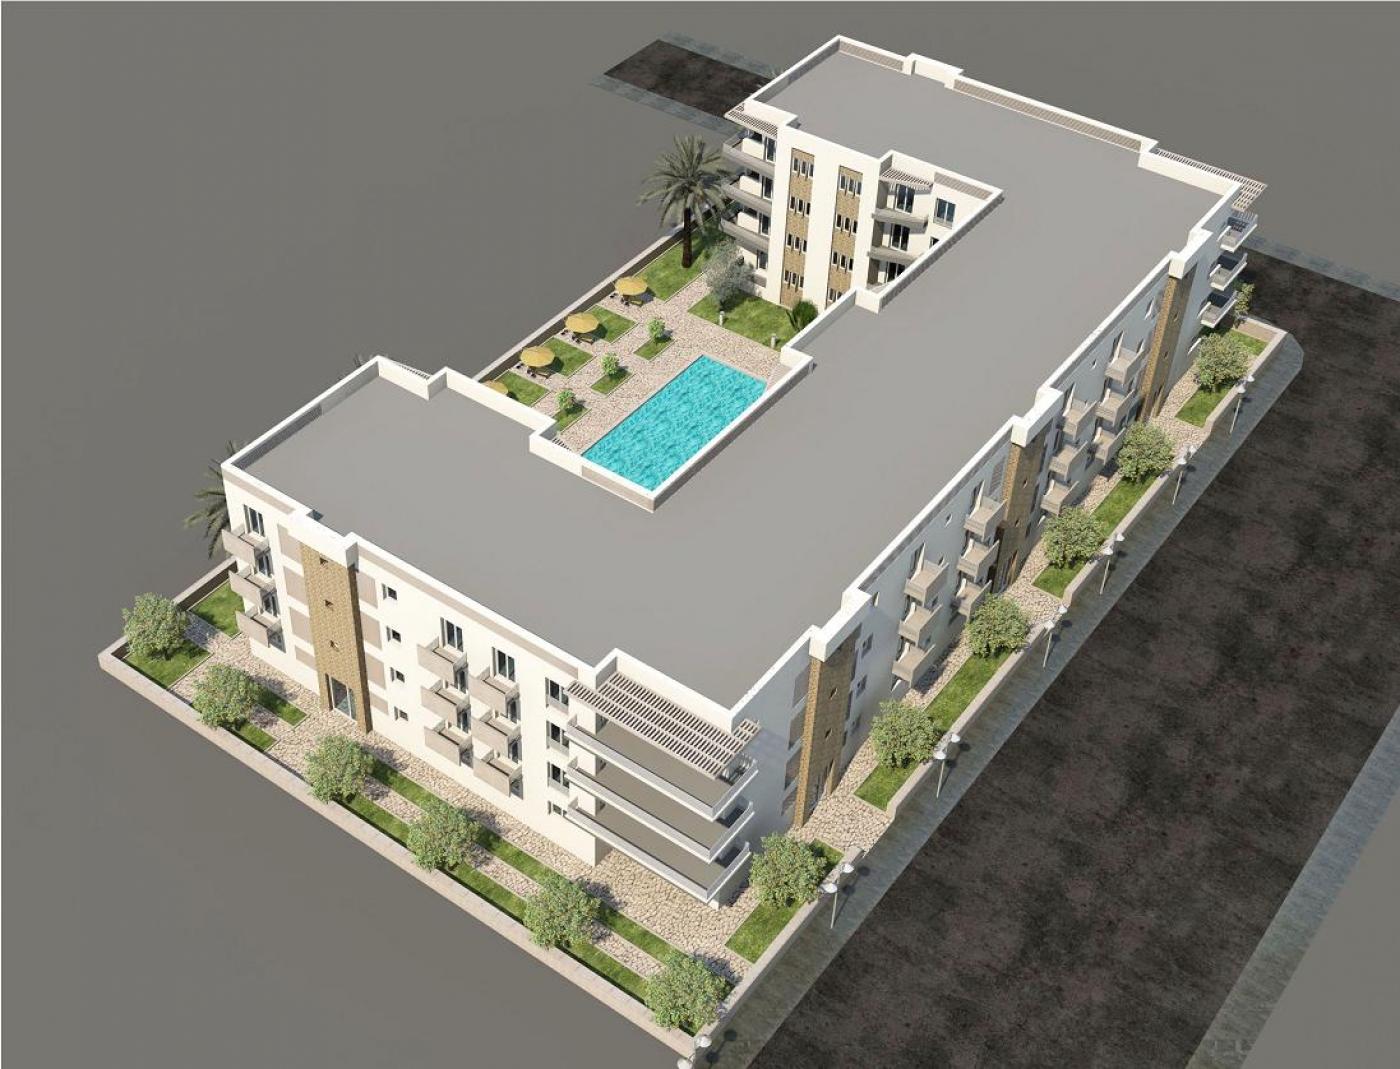 New Development  for sale in  Mohammedia - 